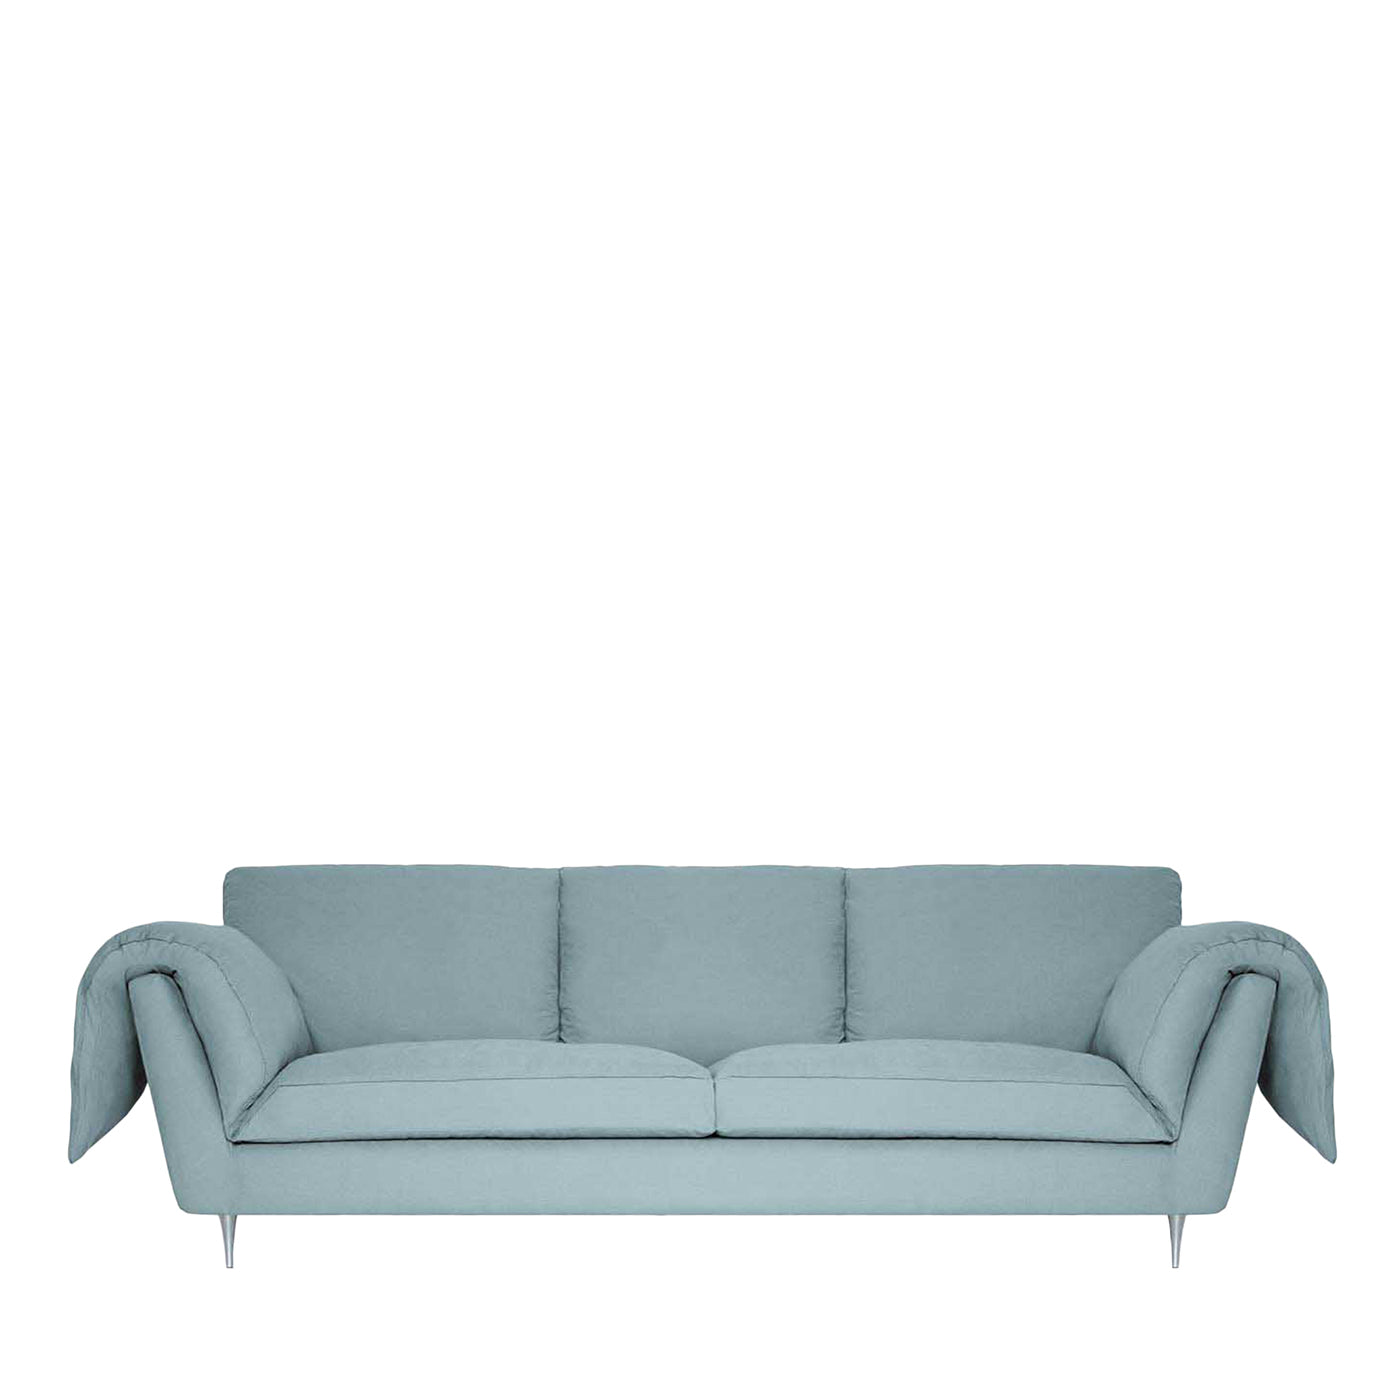 Casquet in Almond Green 3 Seater Bio Sofa - Main view